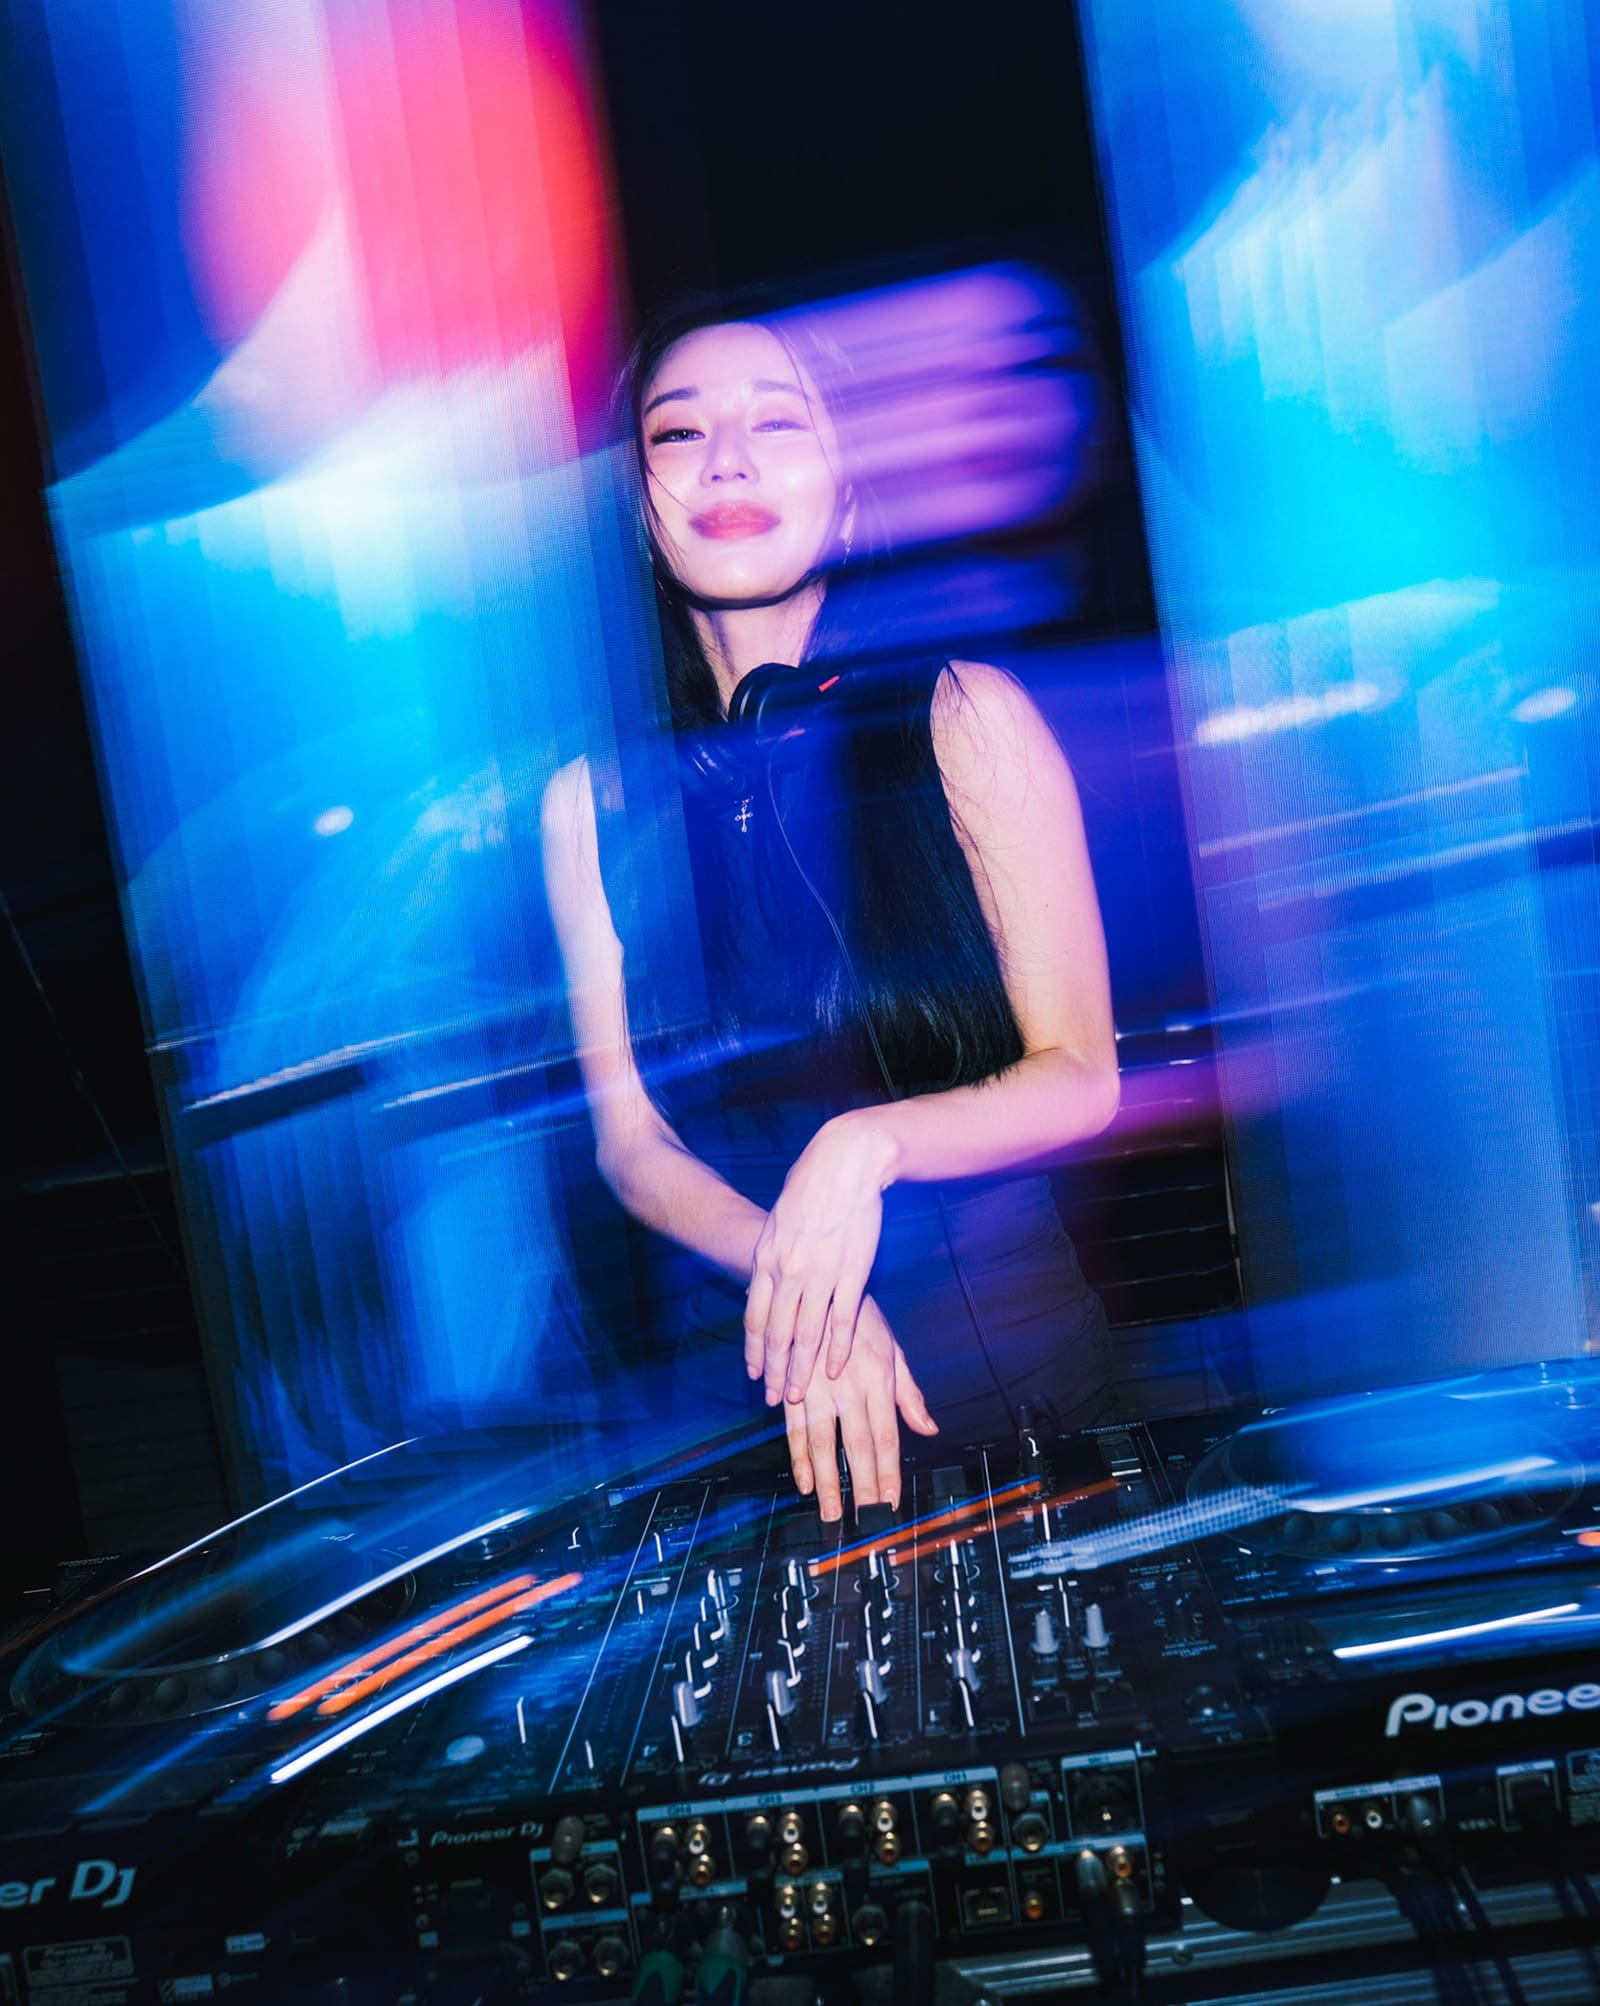 A blurred photo of South Korean DJ Siena